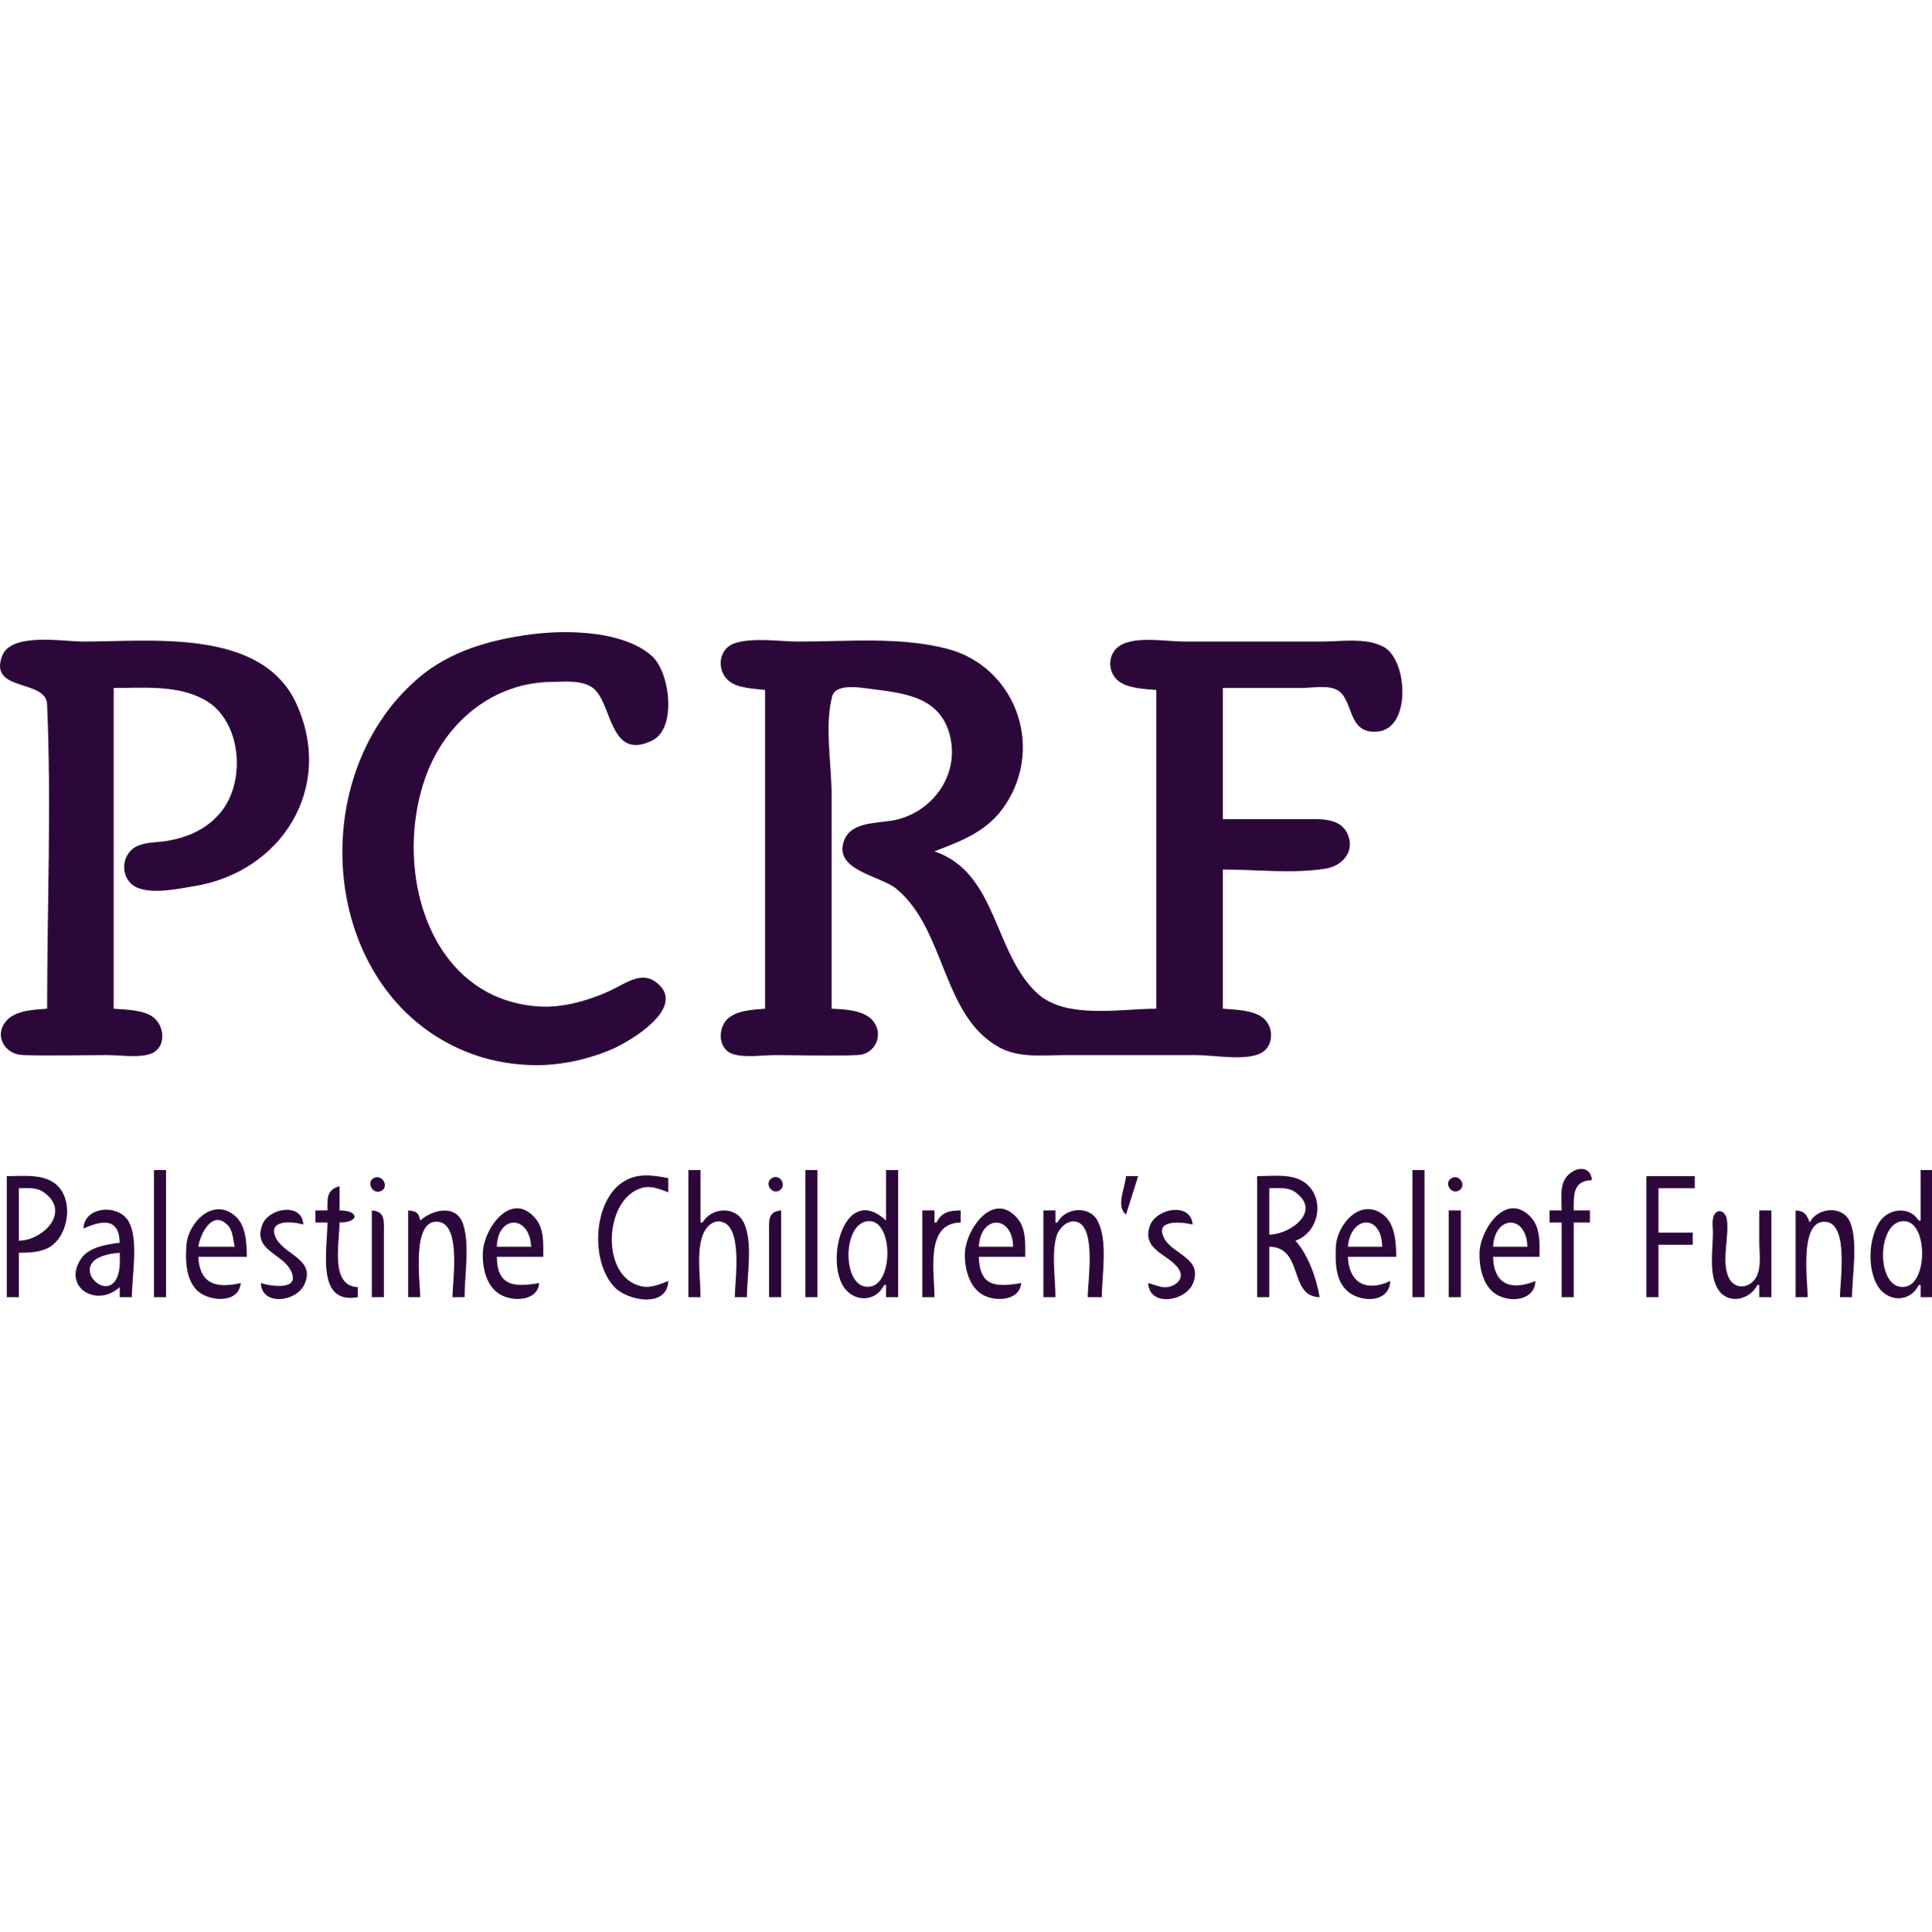 PCRF Text Logo  Transparent Gallery